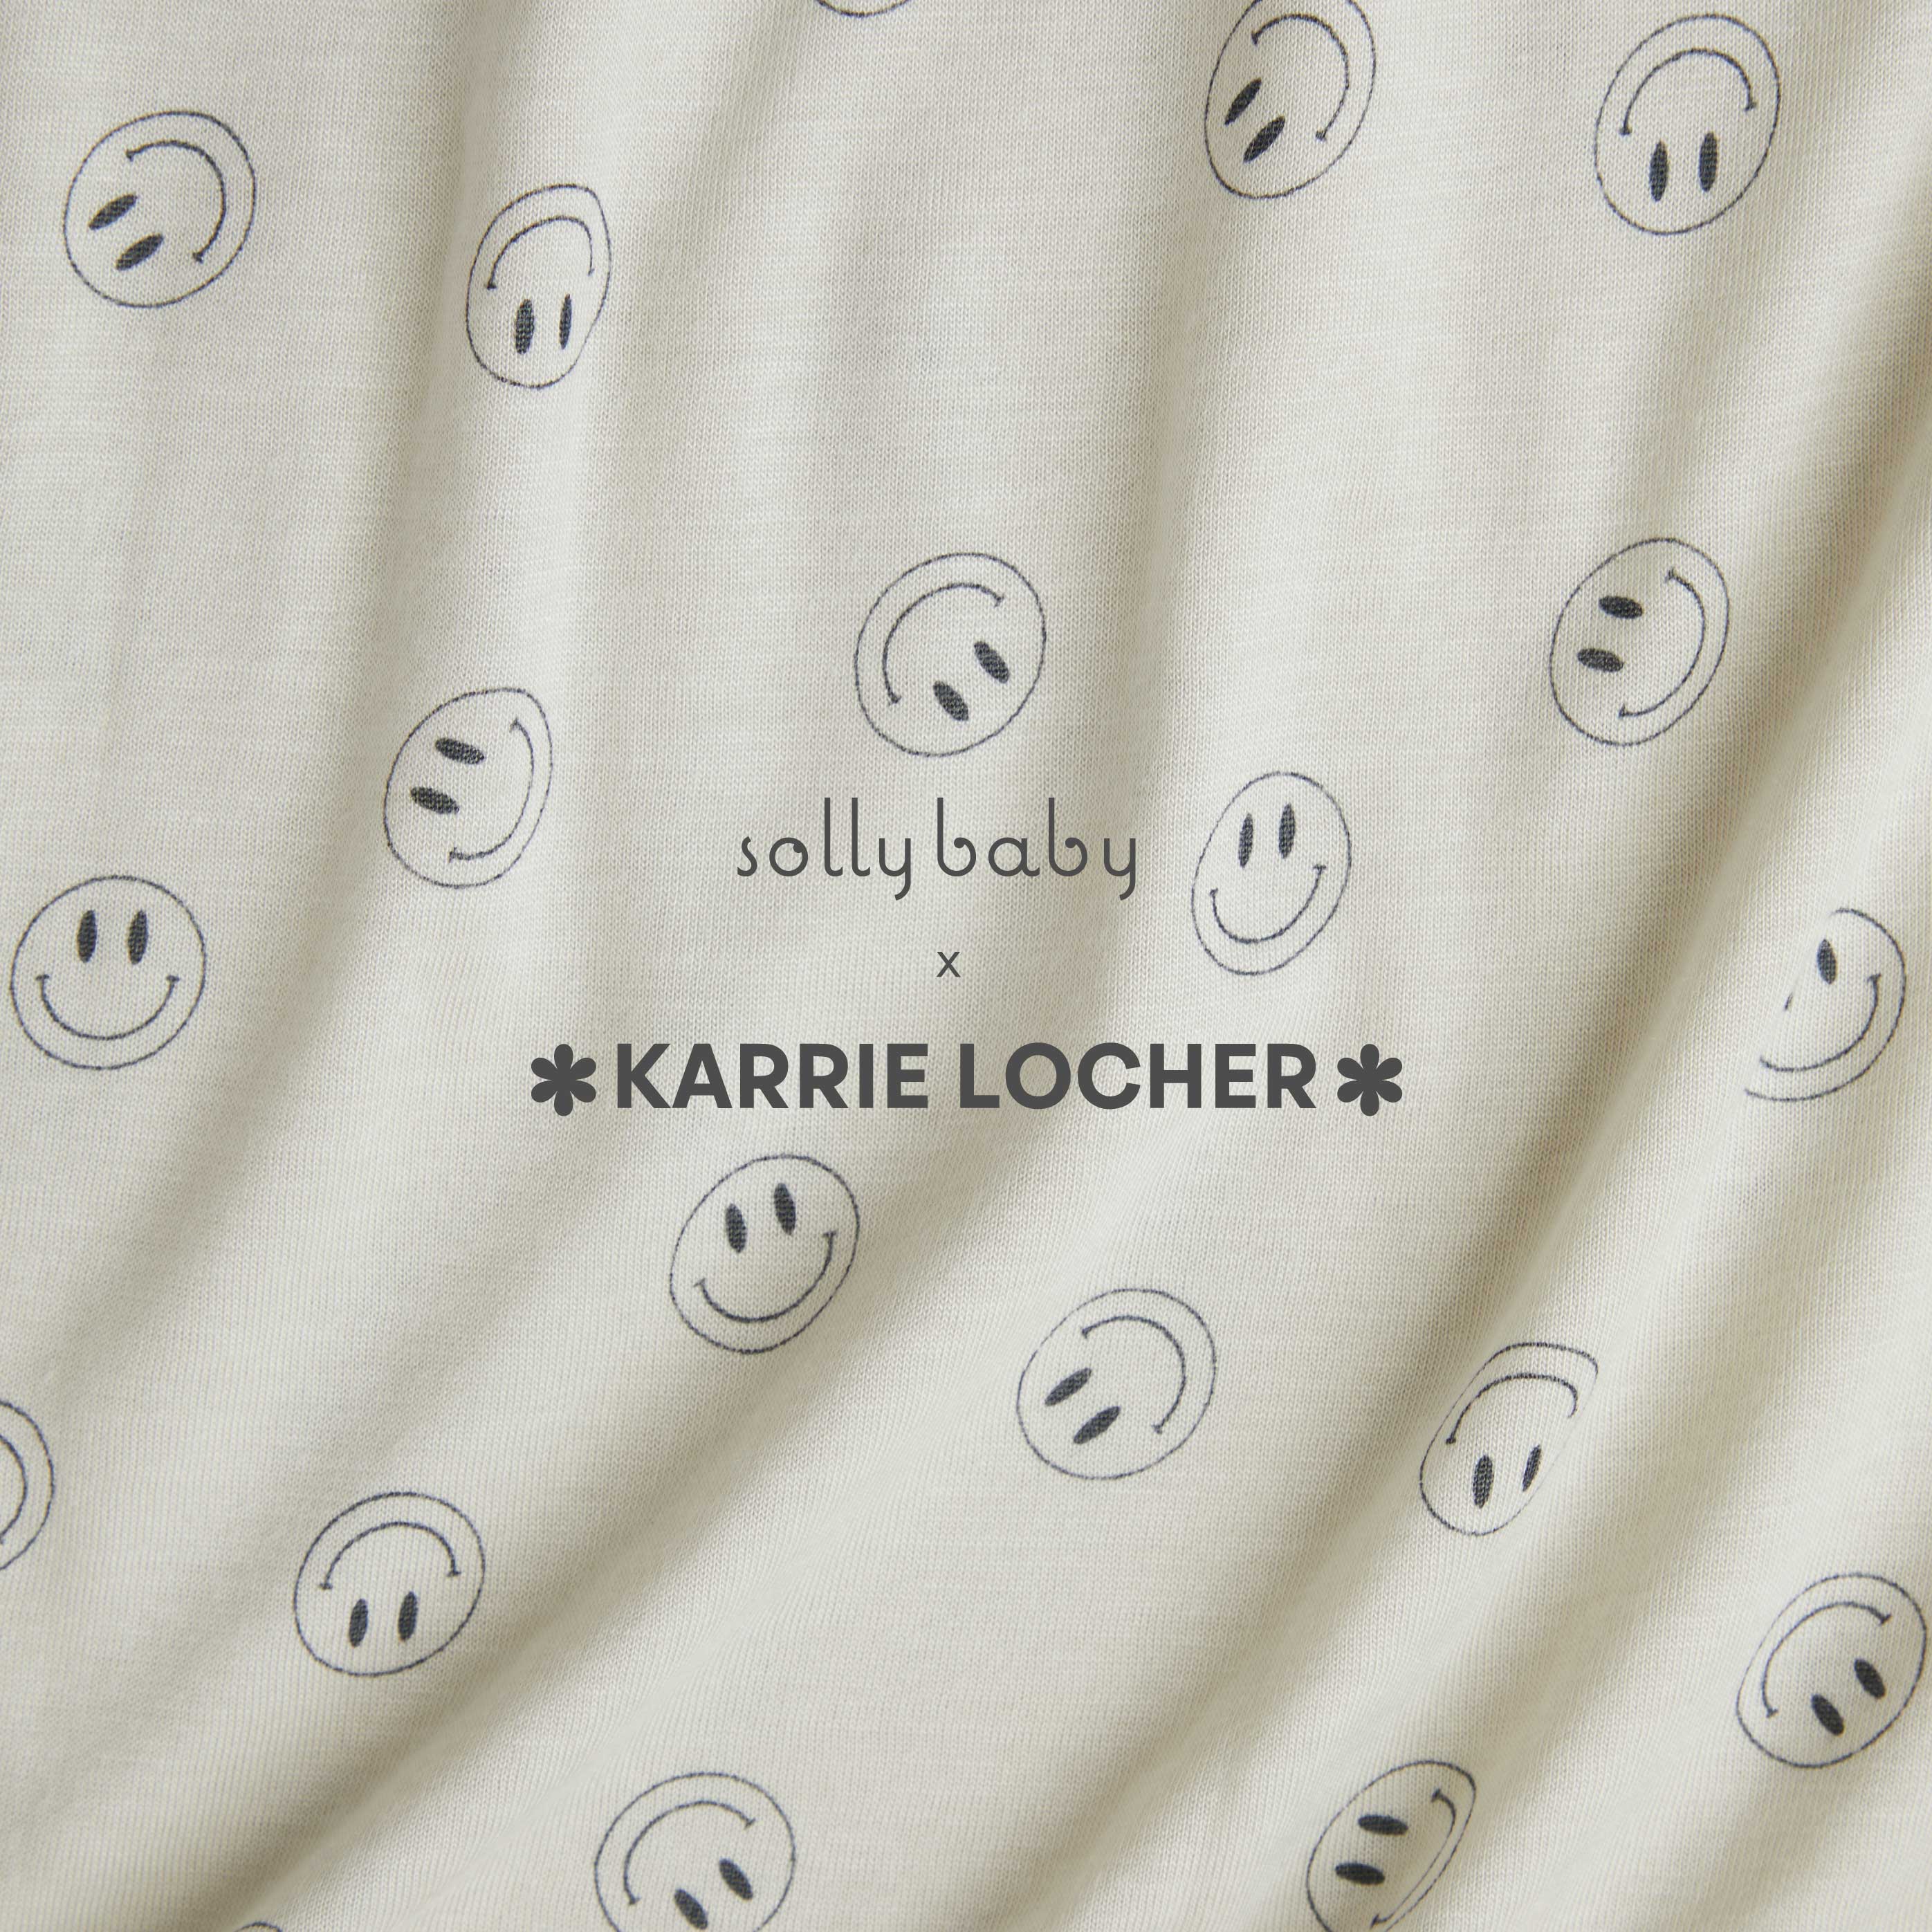 Meet Our Newest Collaborator: Karrie Locher